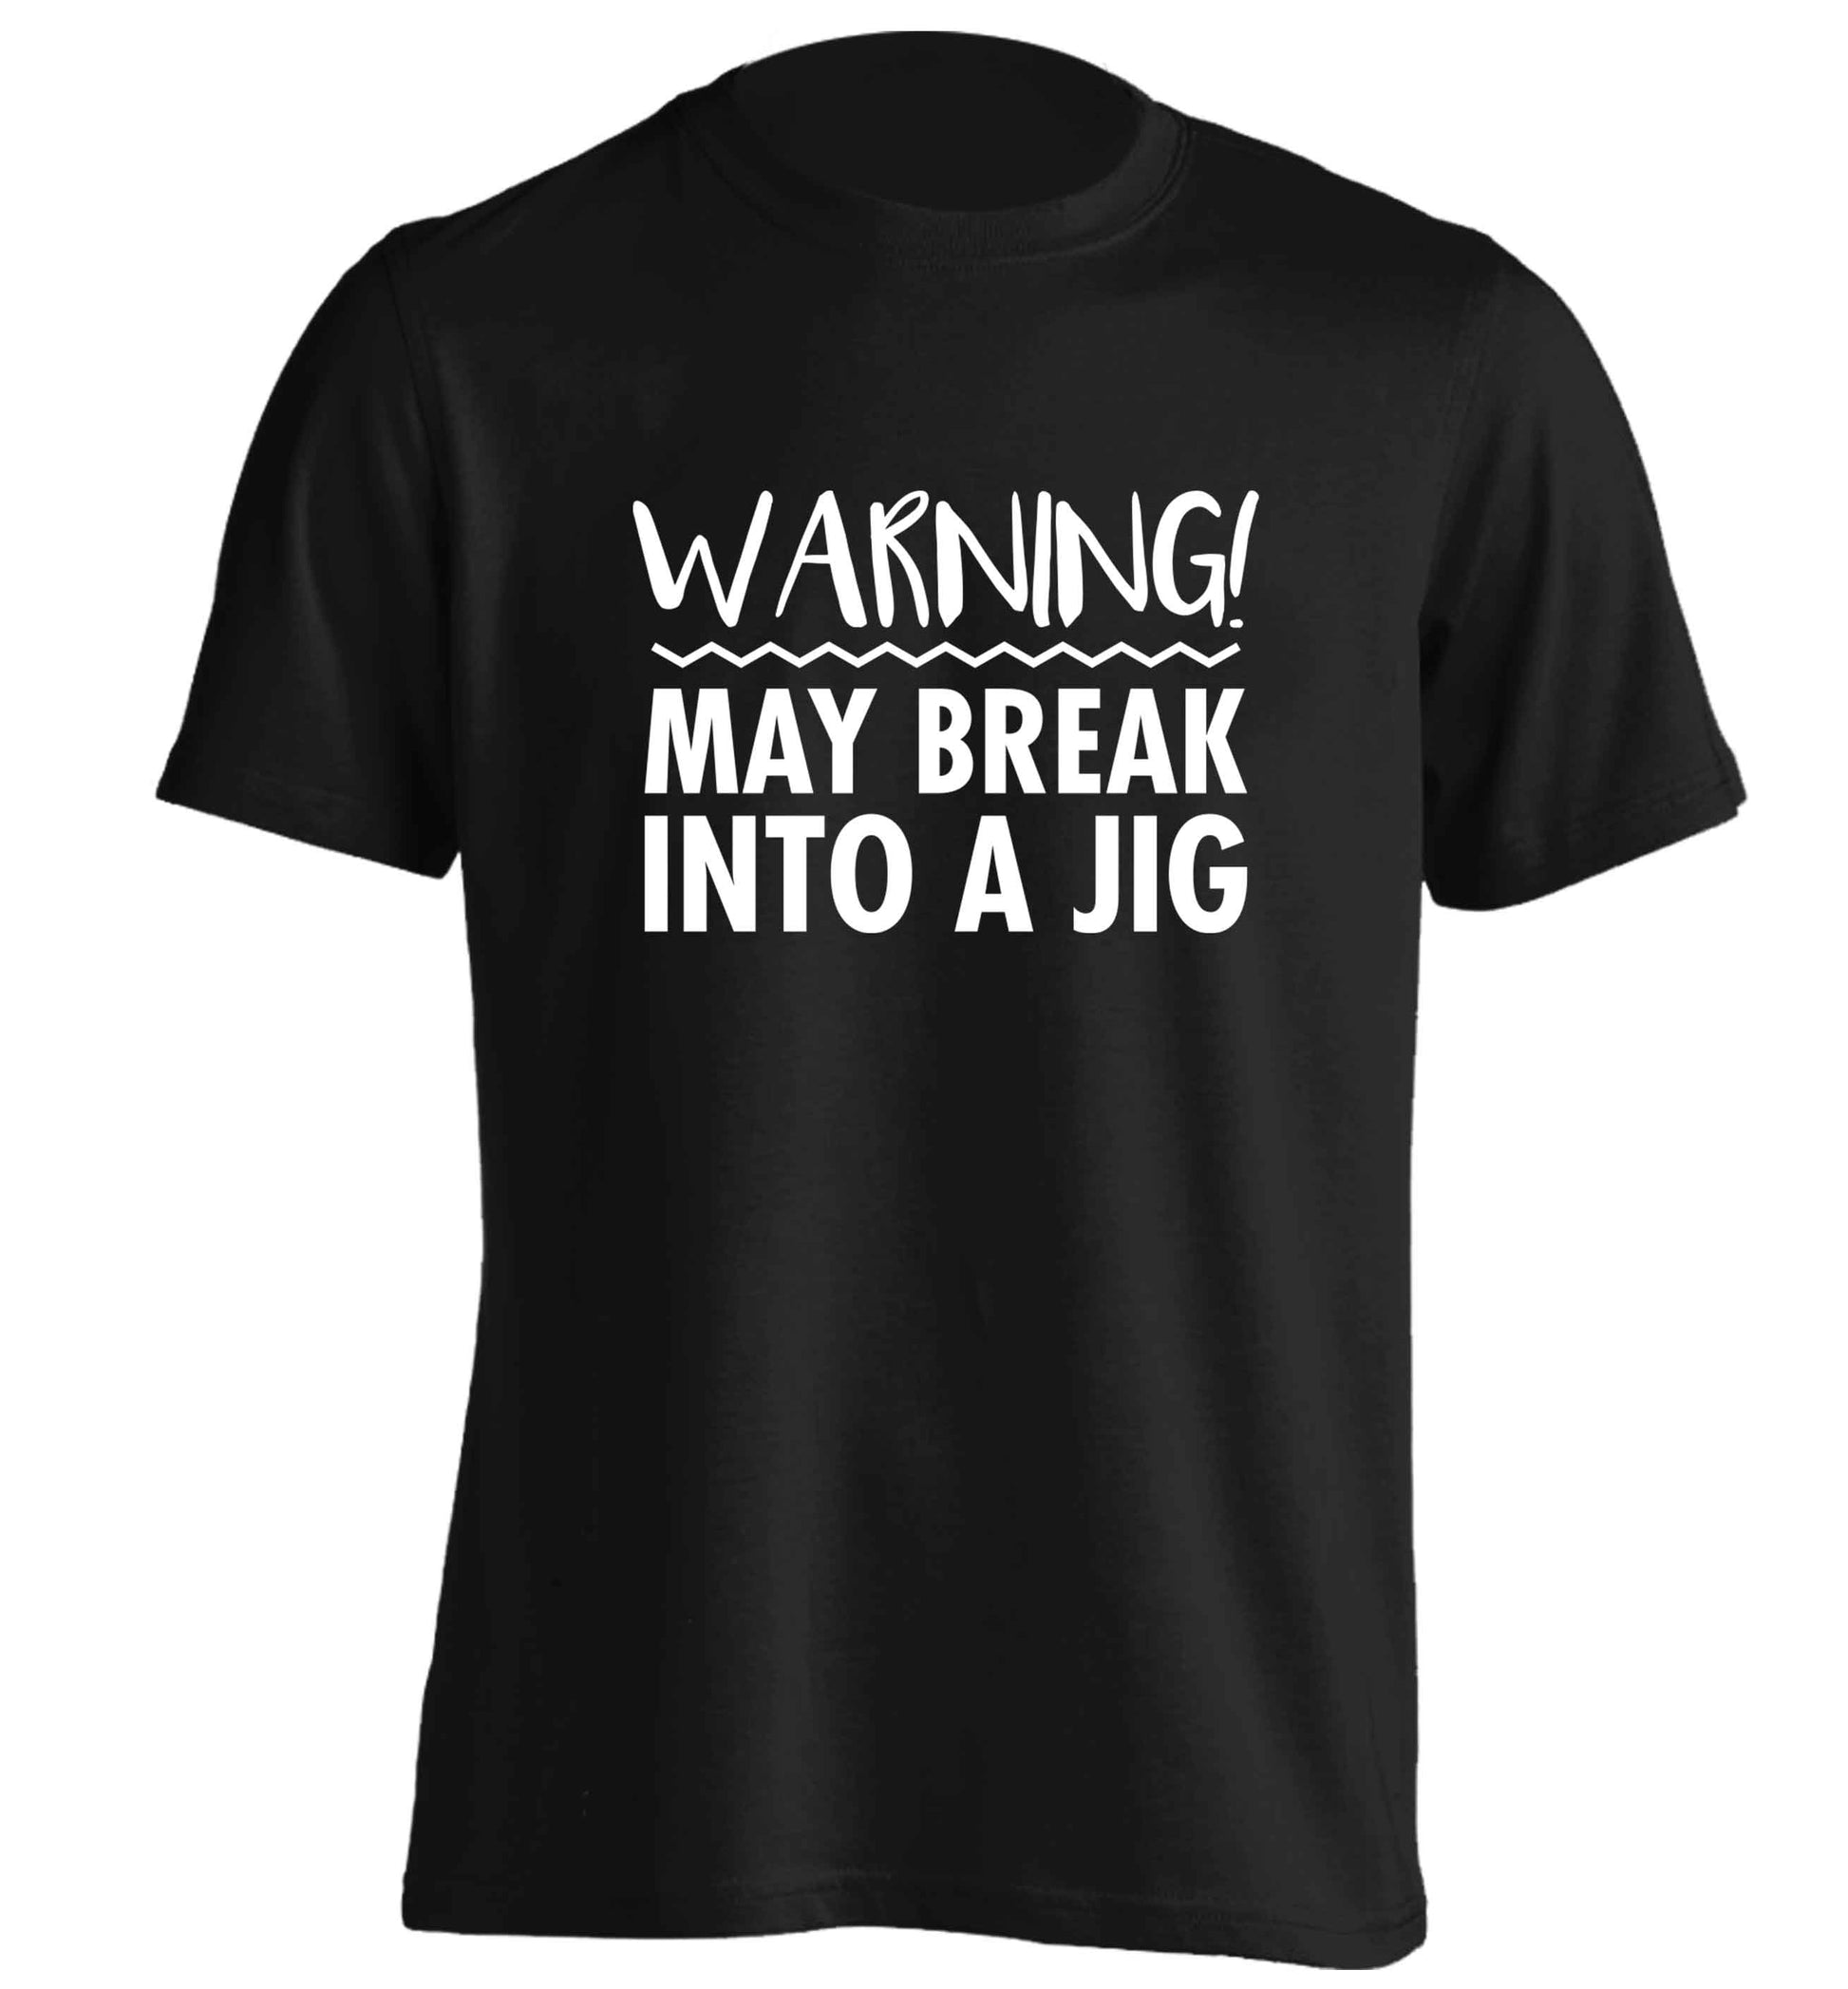 Warning may break into a jig adults unisex black Tshirt 2XL